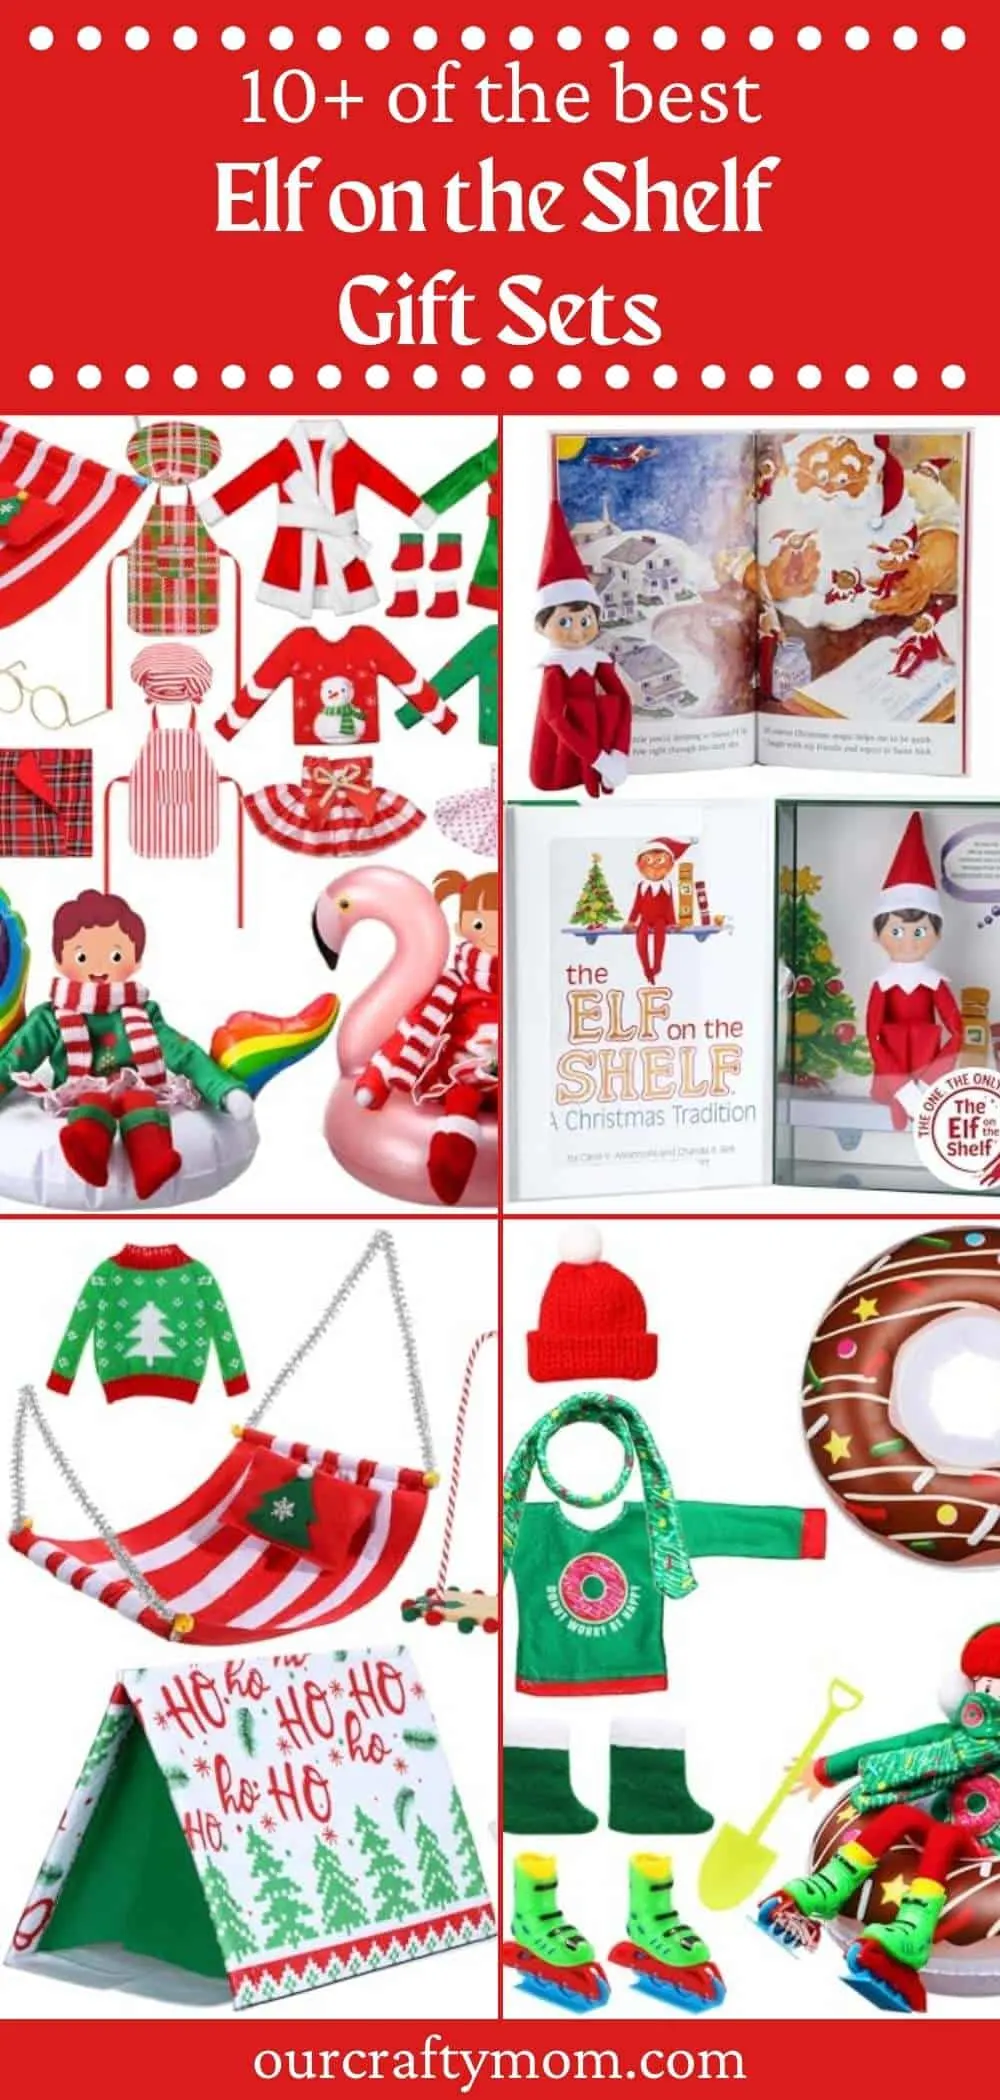 10+ best Elf on the Shelf kits on Amazon pin collage